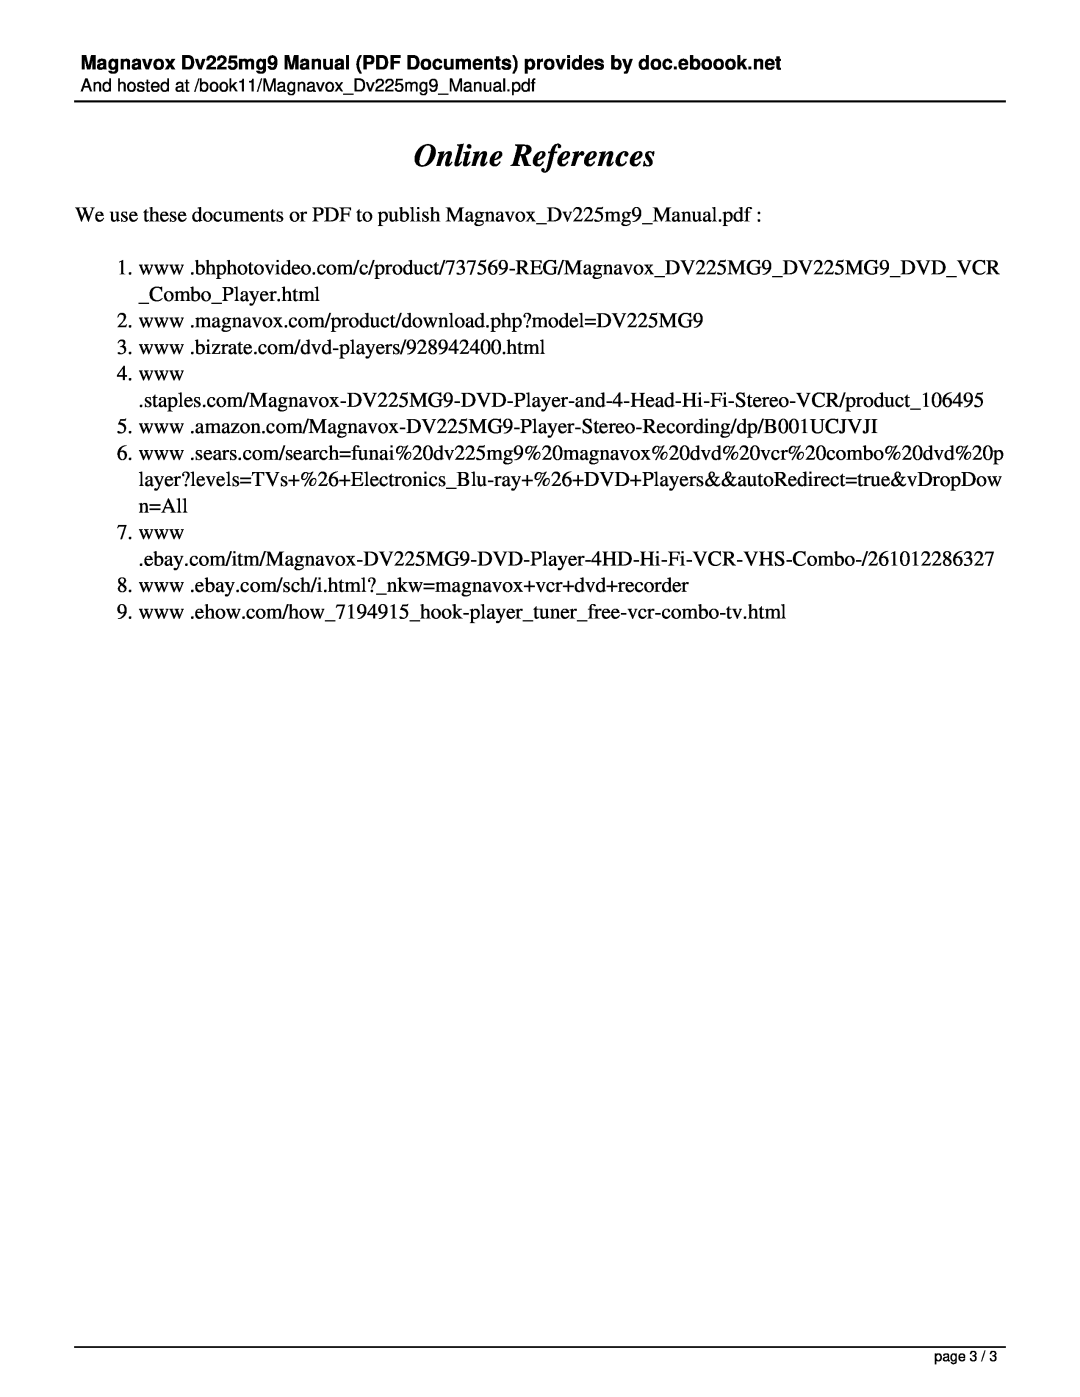 Magnavox DV225MG9 manual Online References 